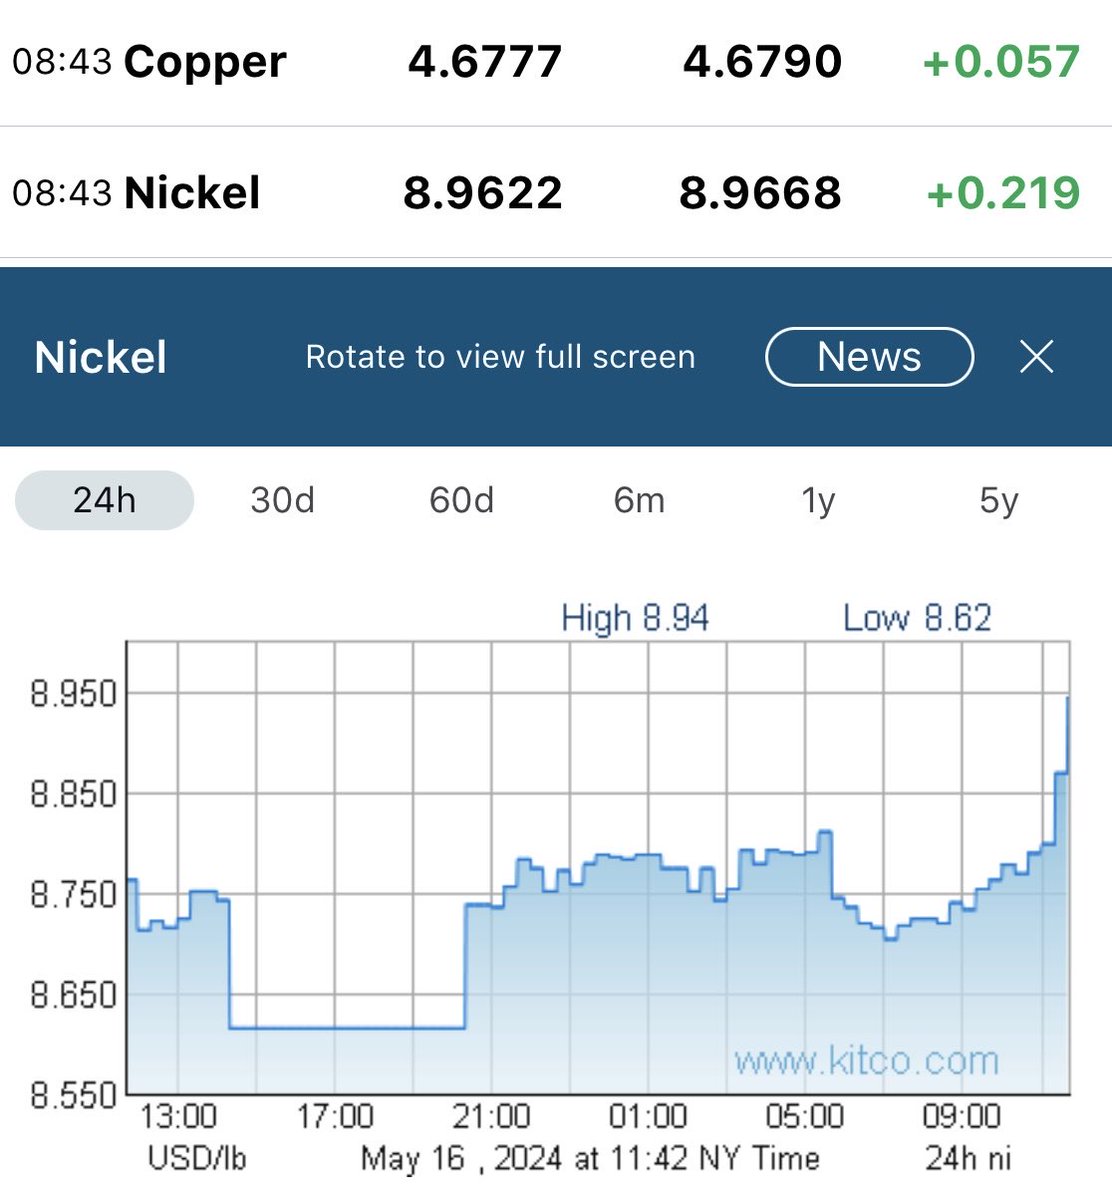 Nickel Approaching $9 📈⏰🤑  #CanadaNickel 
#Samsung 8.7%
#AngloAmerican 7.6%
#AgnicoEagle 11%
#SudburyTwoPointO
#NetZeroNickel 
#TM  #Nickel  $CNIKF
$NOB.V $CNC.V $SHL.V  #EV
#BatteryMetals #Reddit #Mining #Glencore #BHP #Vale #Timmins #Canada